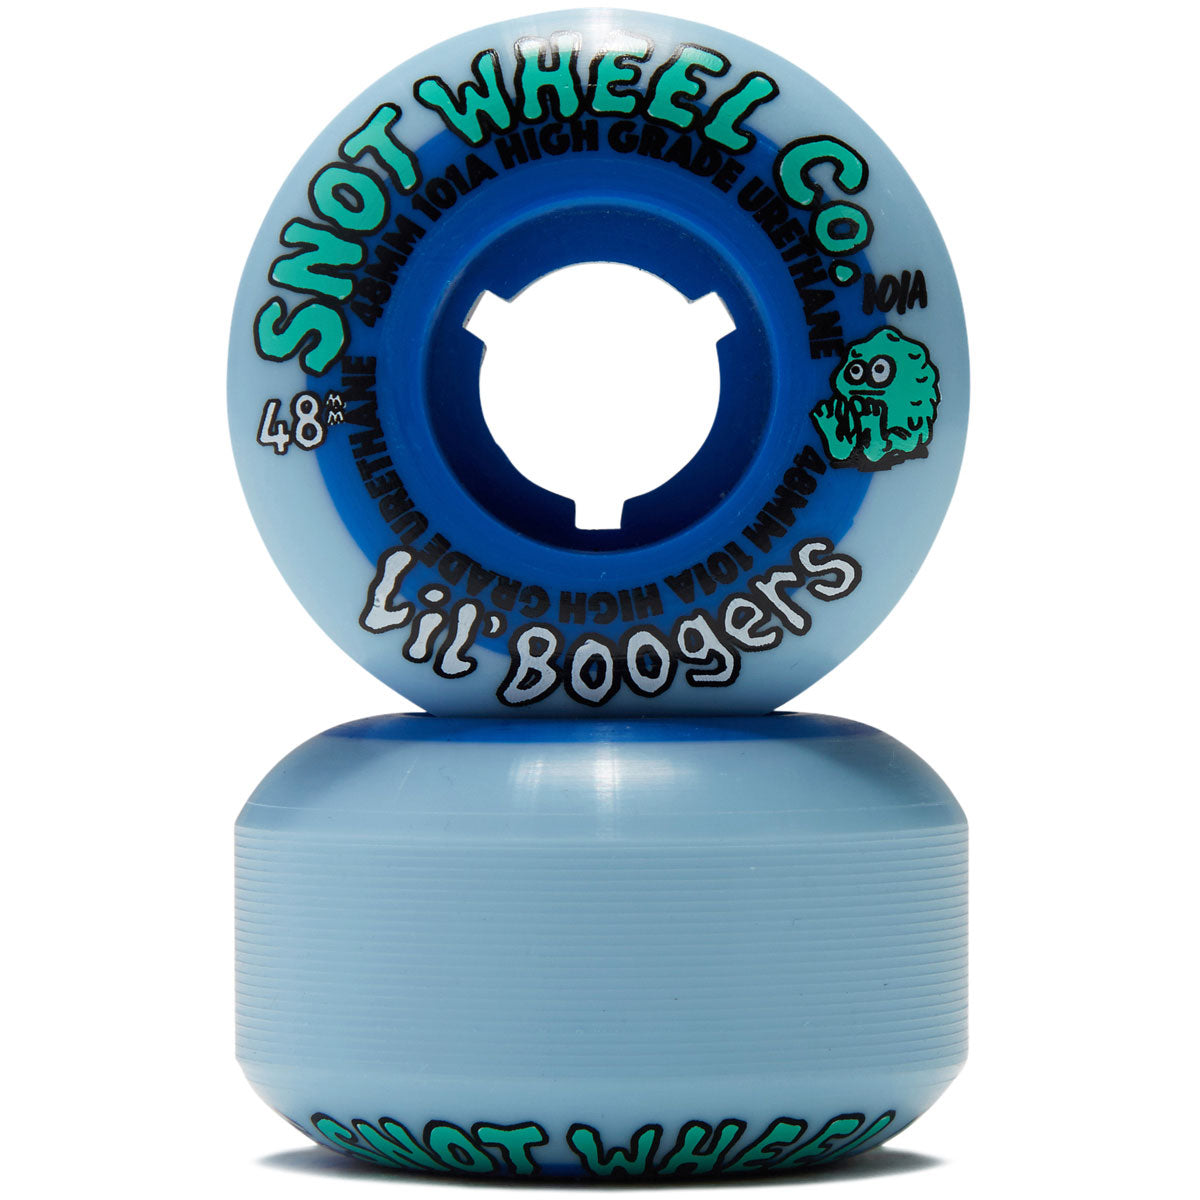 Snot Lil Boogers 101a Skateboard Wheels - Blue Core - 48mm image 2